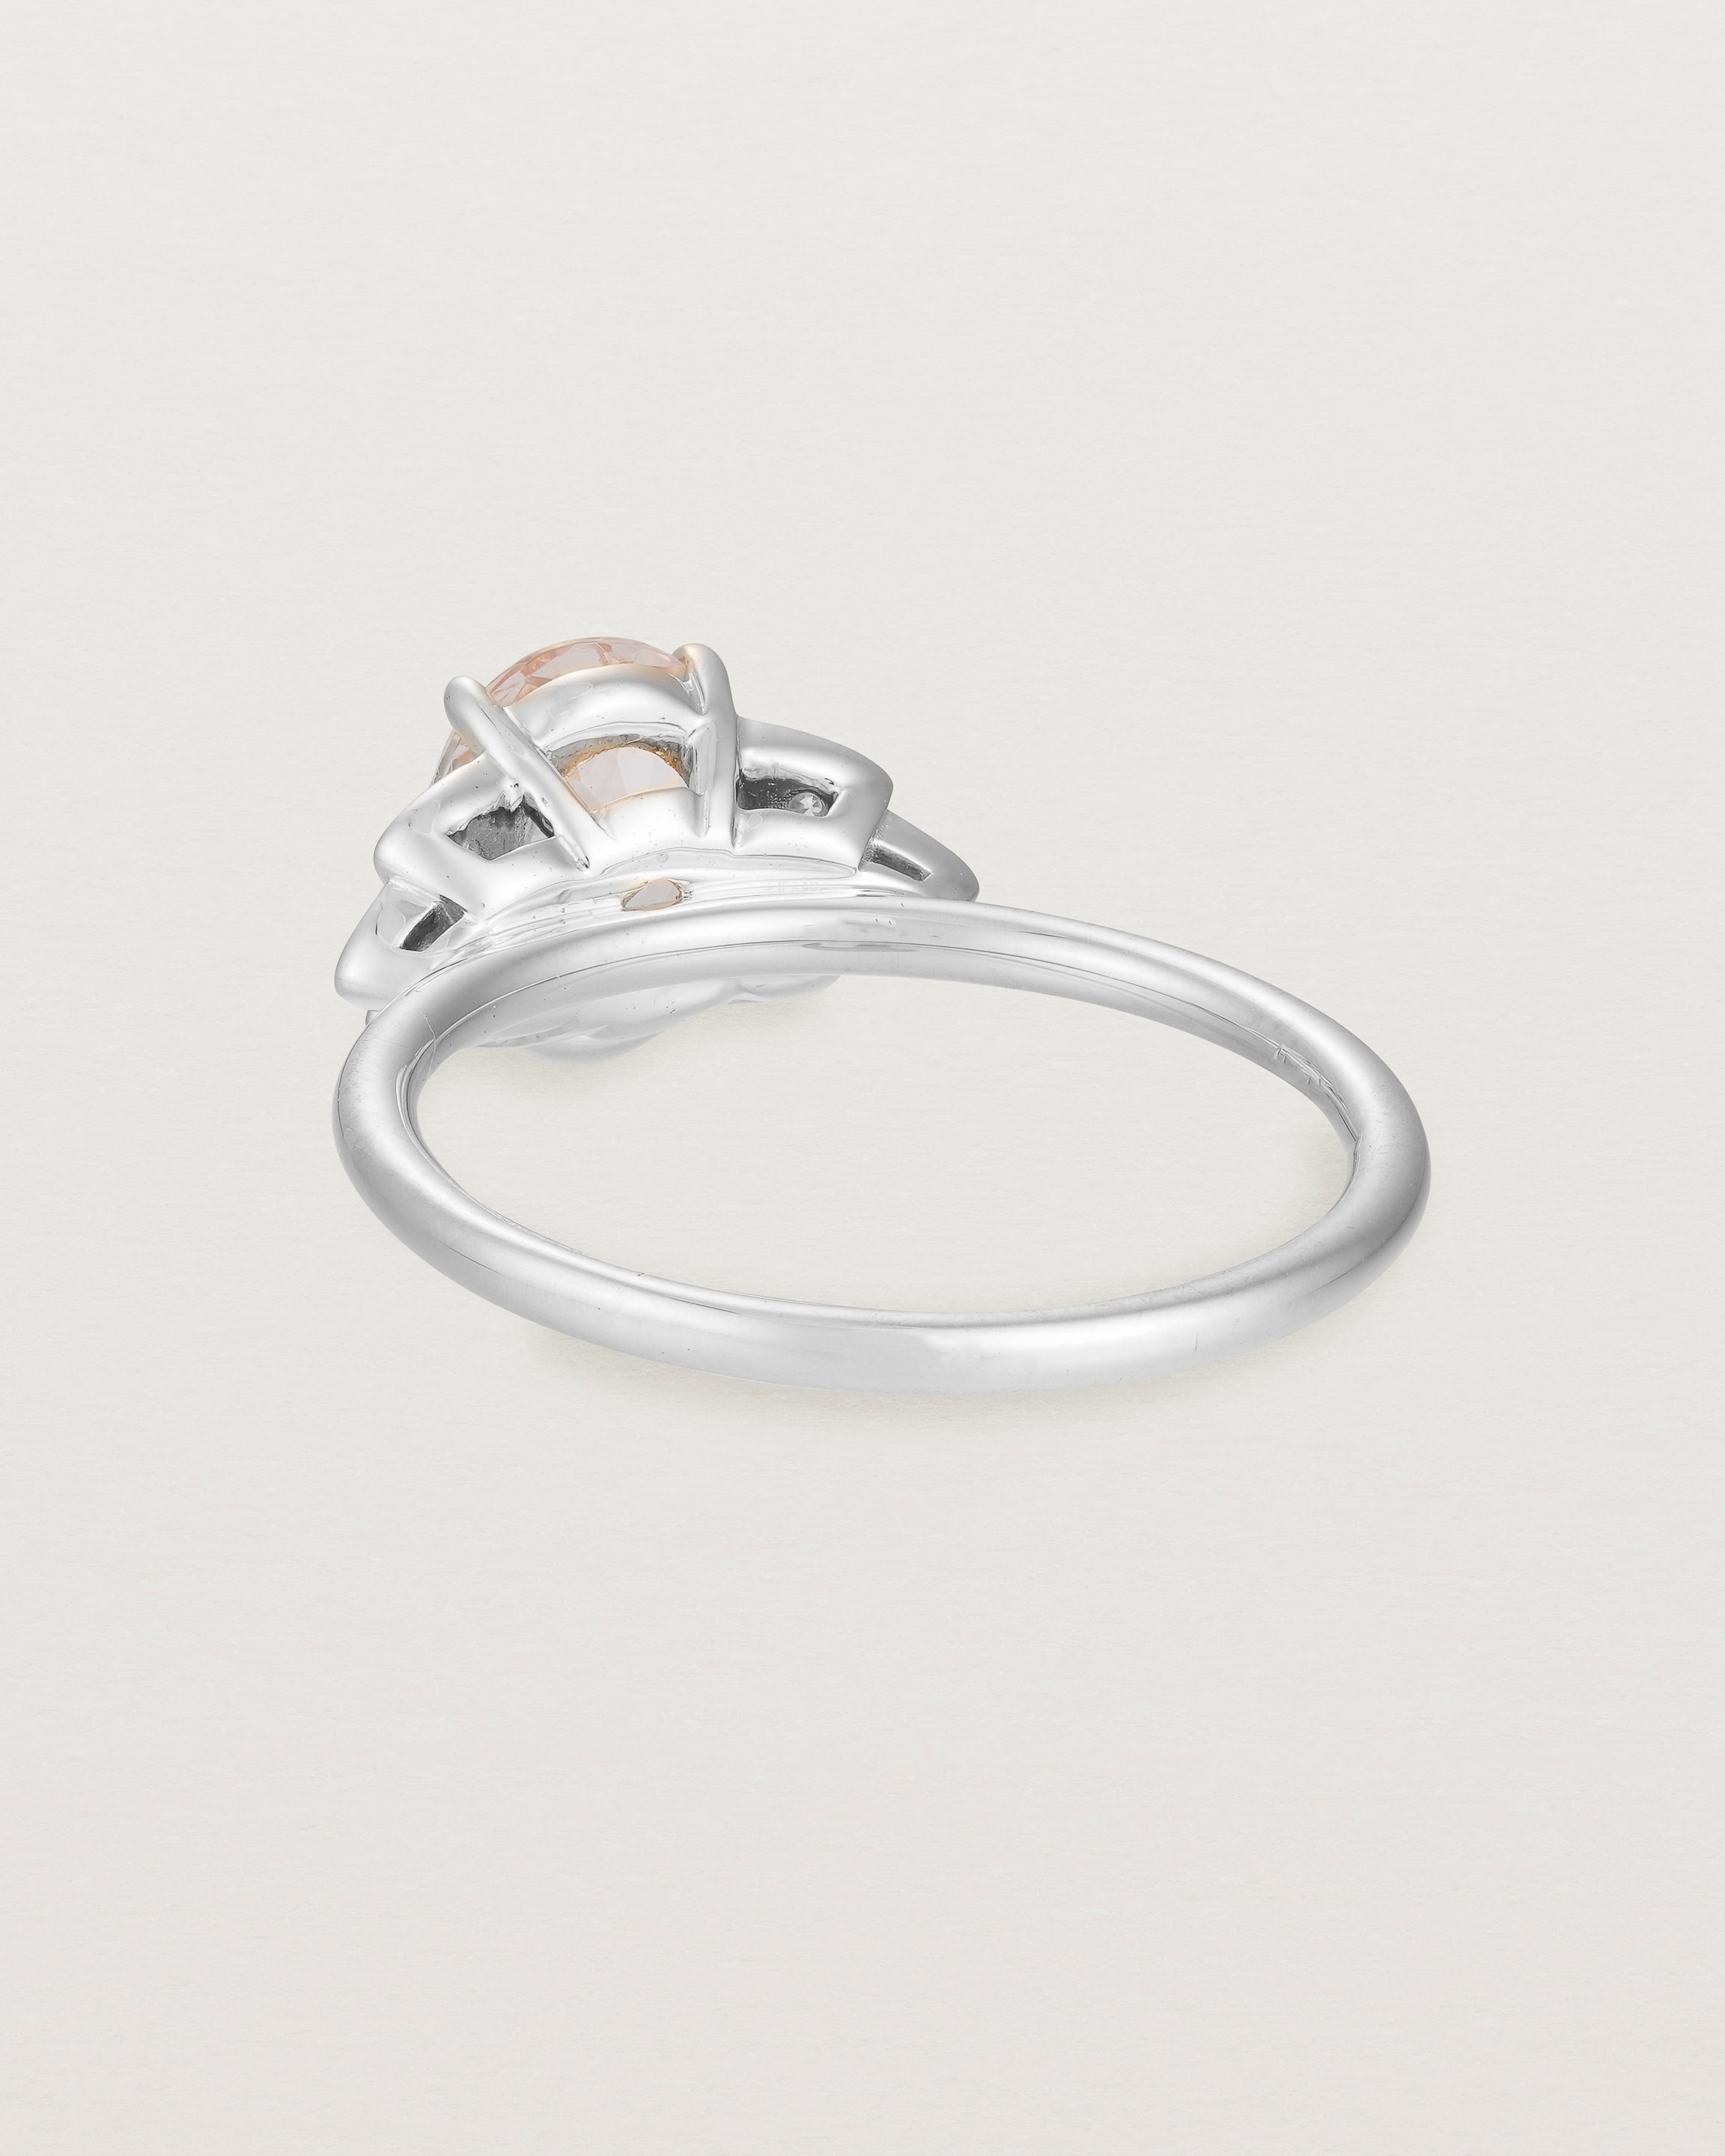 Back view of the Winnie Ring | Morganite & Diamonds | White Gold.